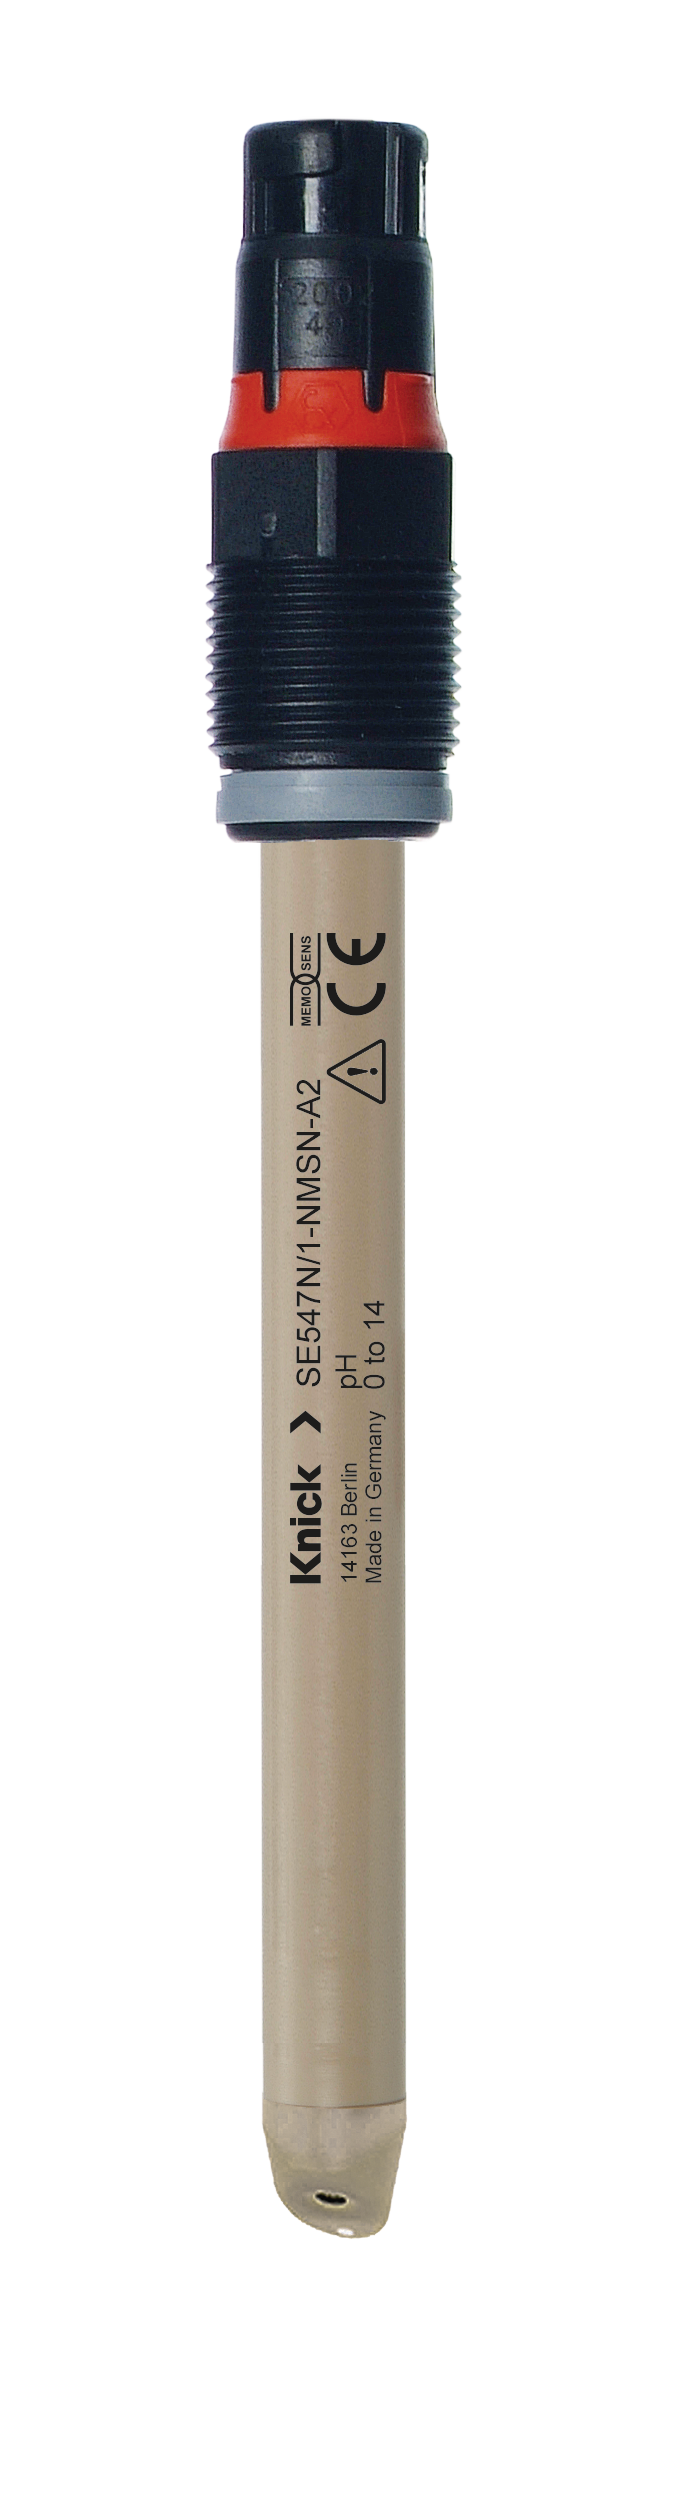 SE547N pH-Sensor | Memosens | 120 mm | CIP-/SIP-fähig und autoklavierbar